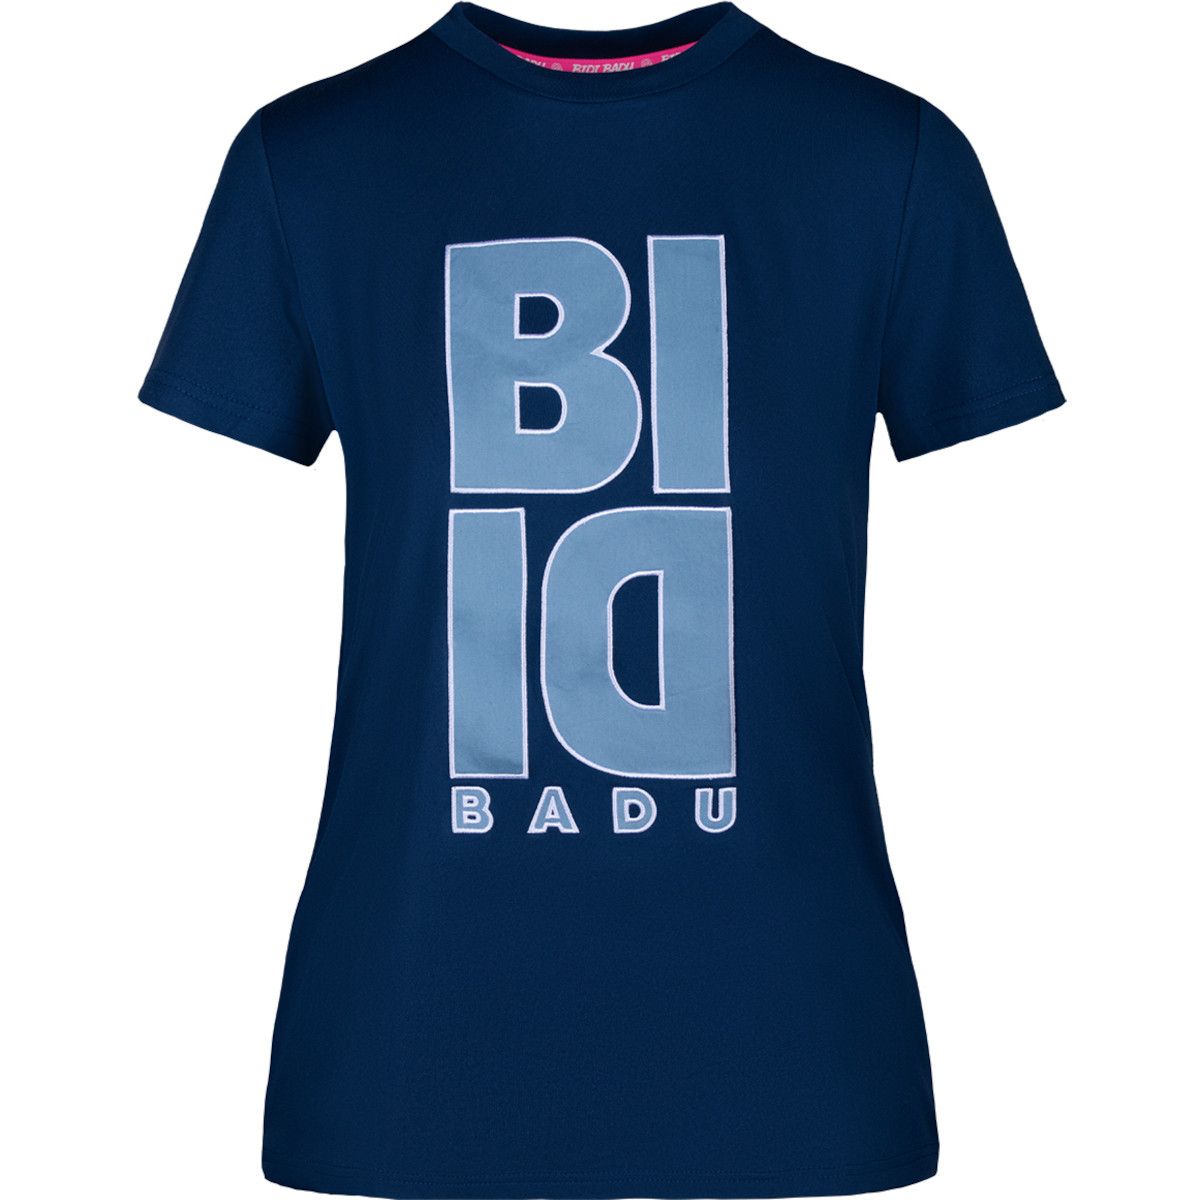 Bidi Badu Aleli Lifestyle Girl's Tennis Tee G358063211-DBL